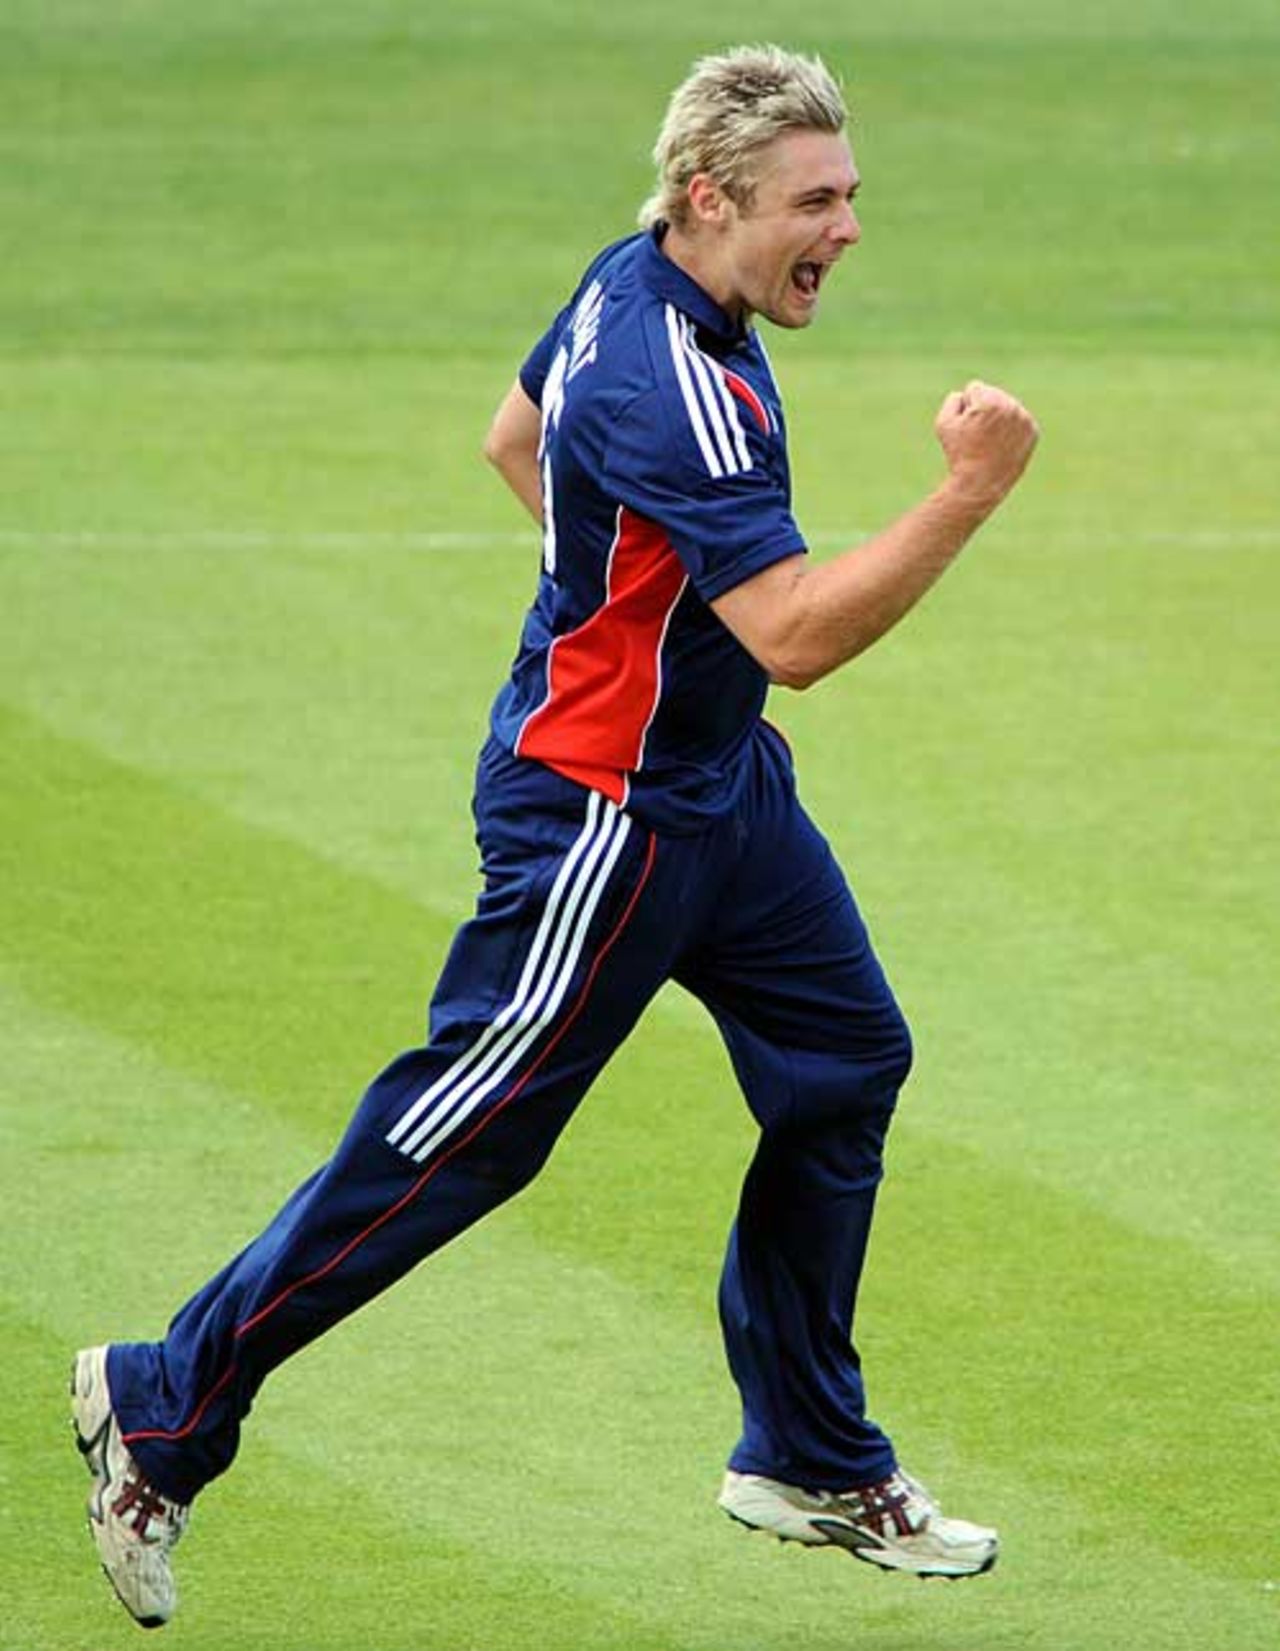 Luke Wright celebrates removing Ross Taylor, England v New Zealand, 1st ODI, Chester-le-Street, June 15, 2008